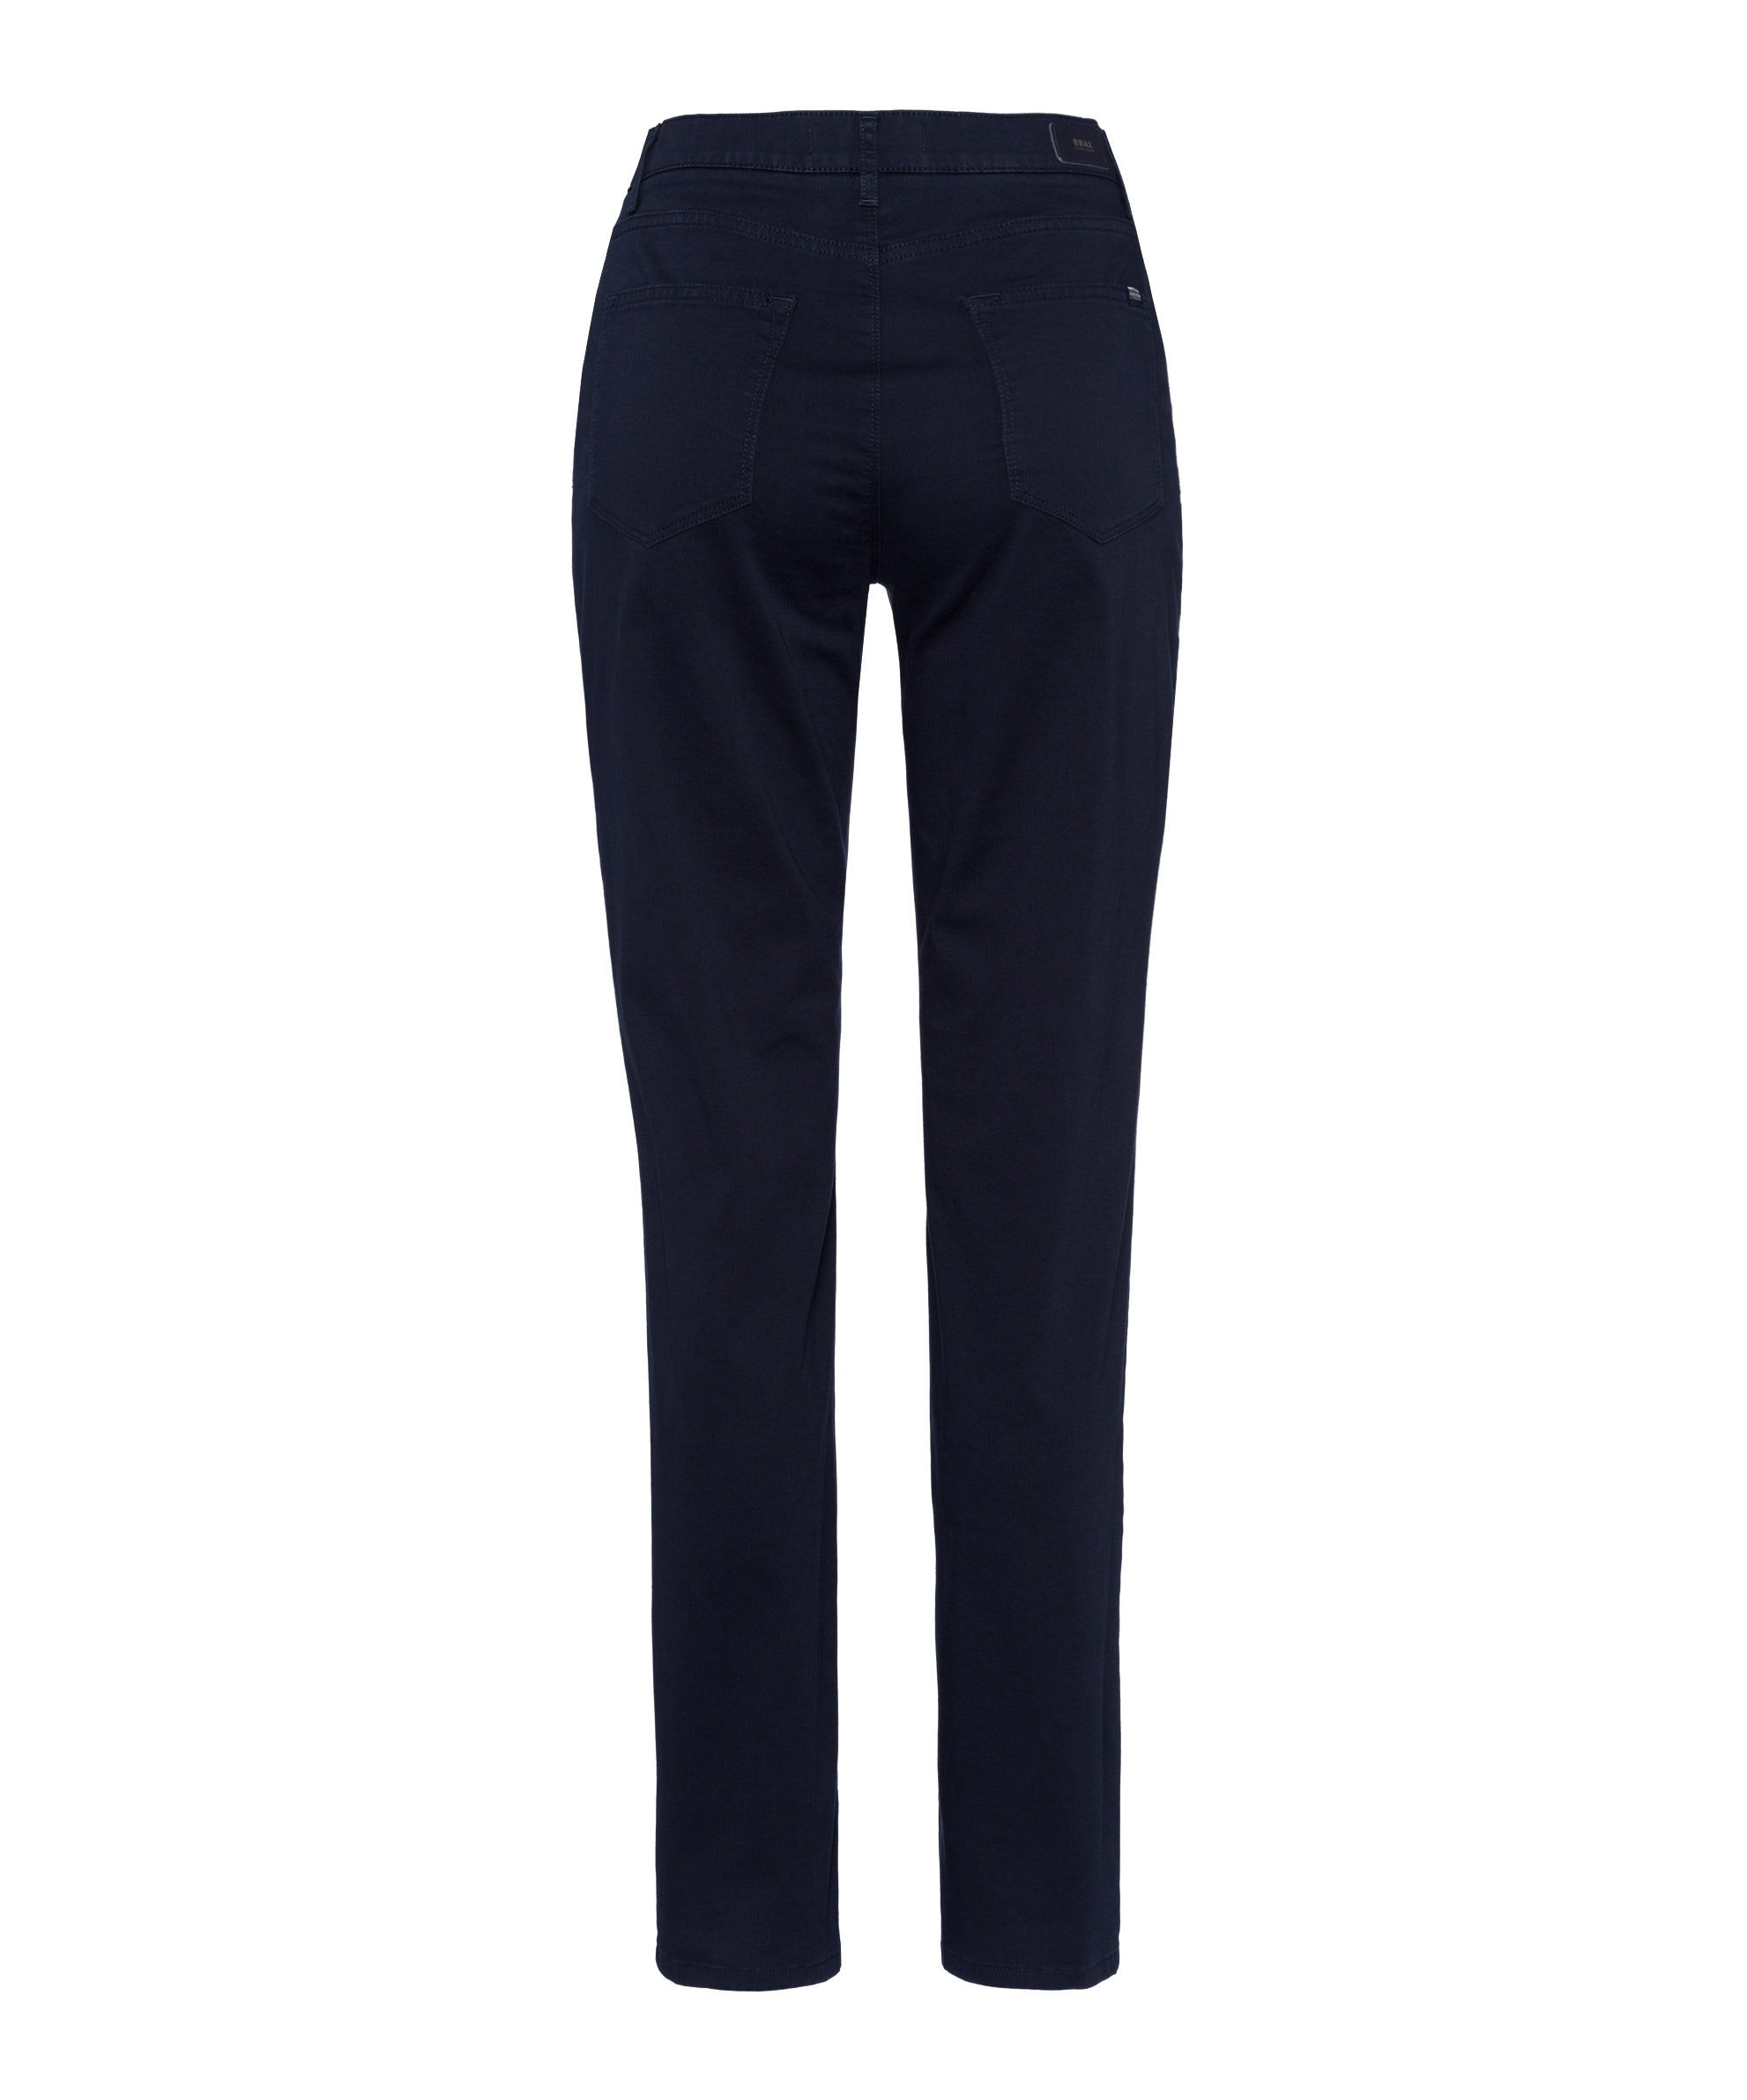 Carola blue | SOFT - LOOK Jeans Jeans | 9810620 | Damen SHINY Brax CAROLA | Jeans-Manufaktur BRAX 70-1520-21 | perma Brax STOFFHOSEN